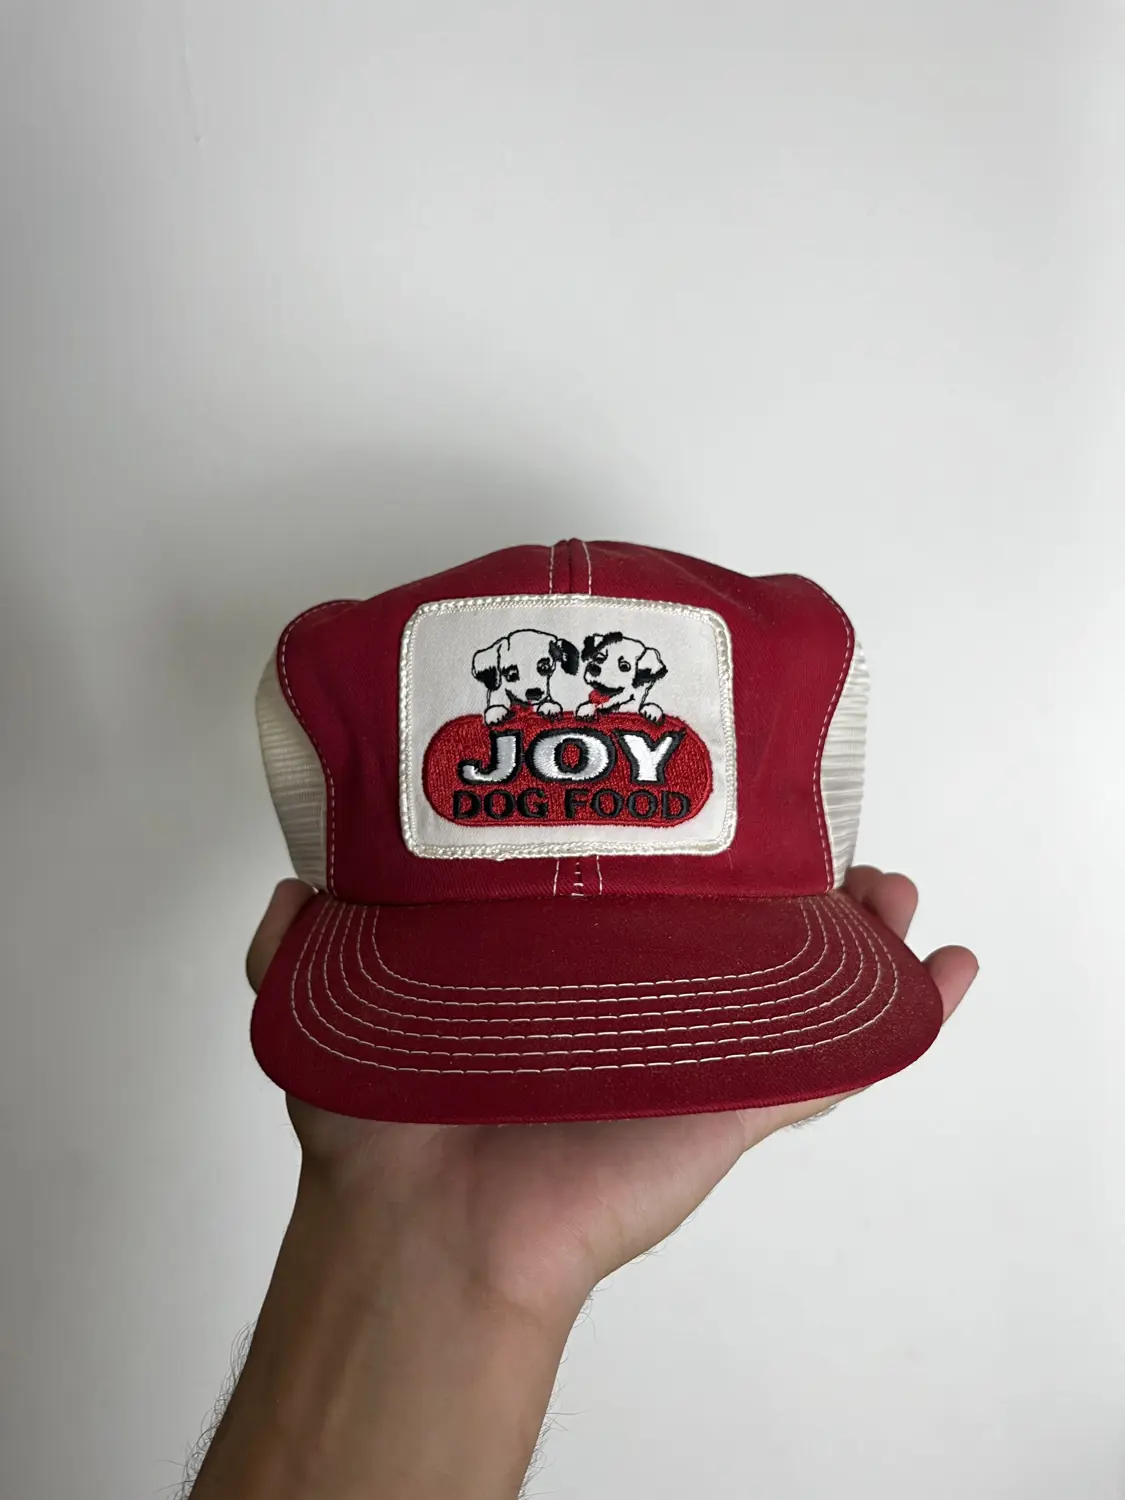 Joy Dogfood hat